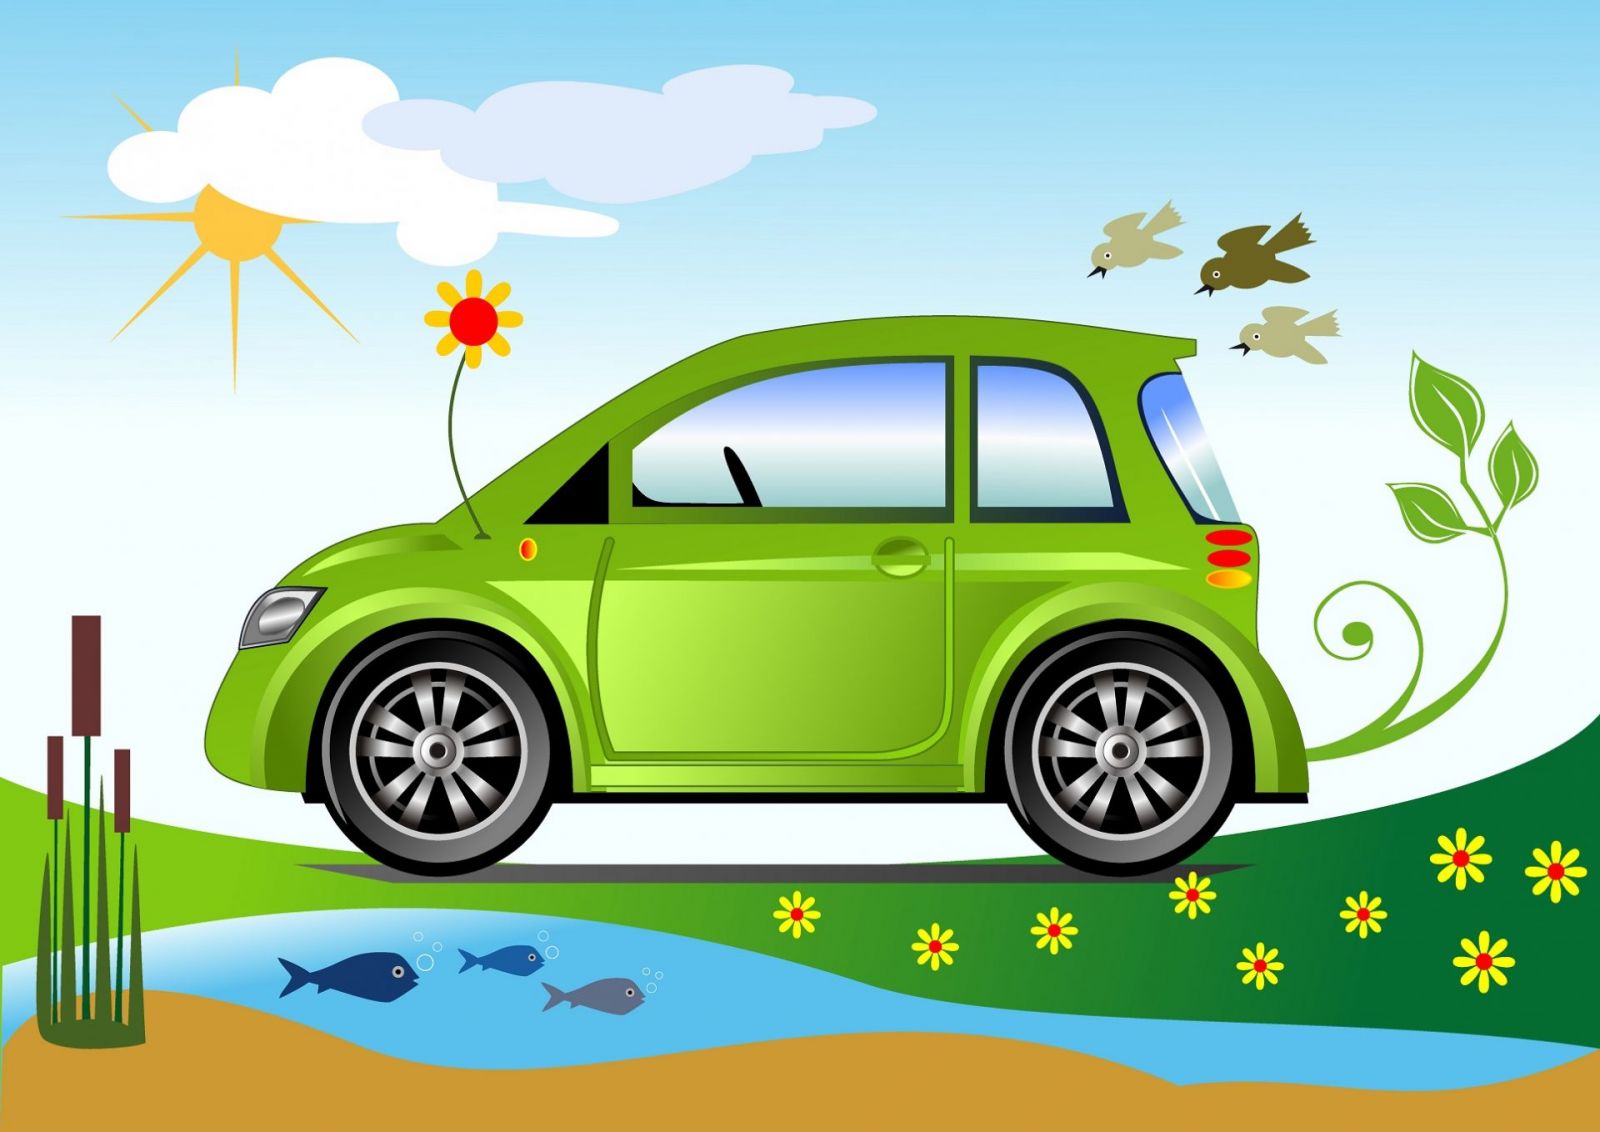 Ecological Friendly Car Concept